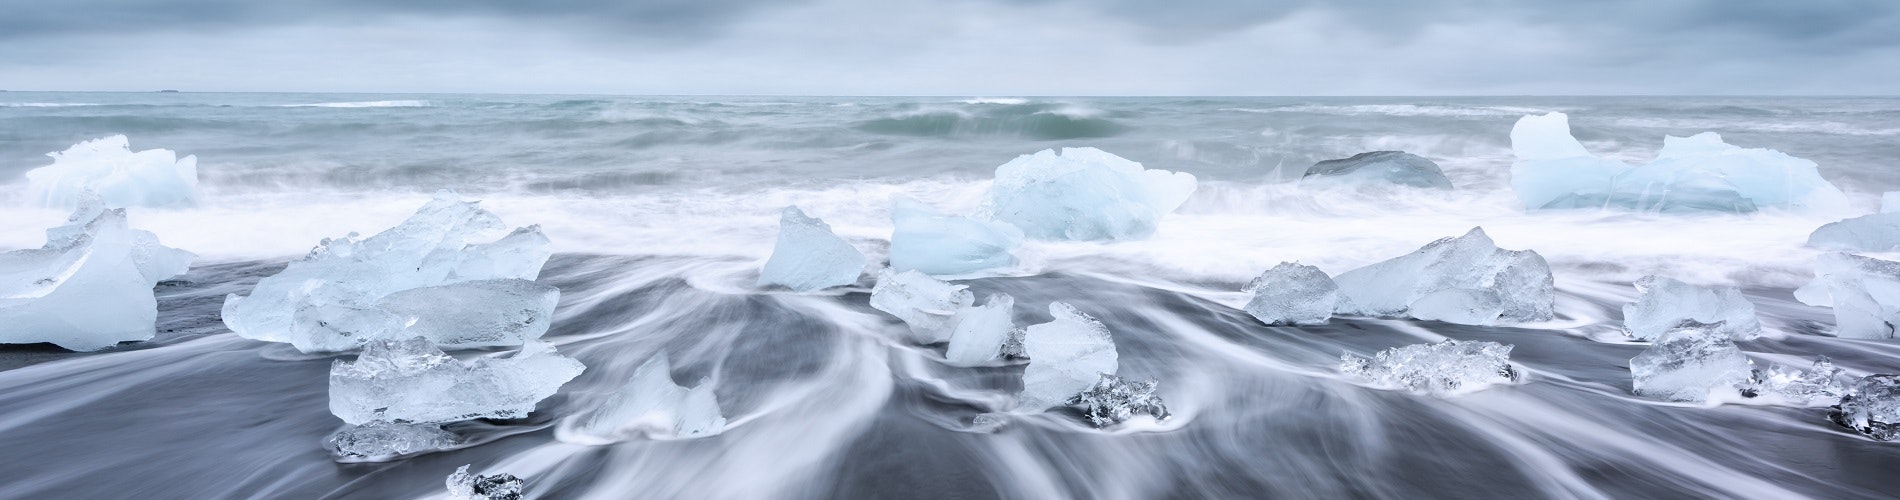 Icebergs on a black beach in Iceland